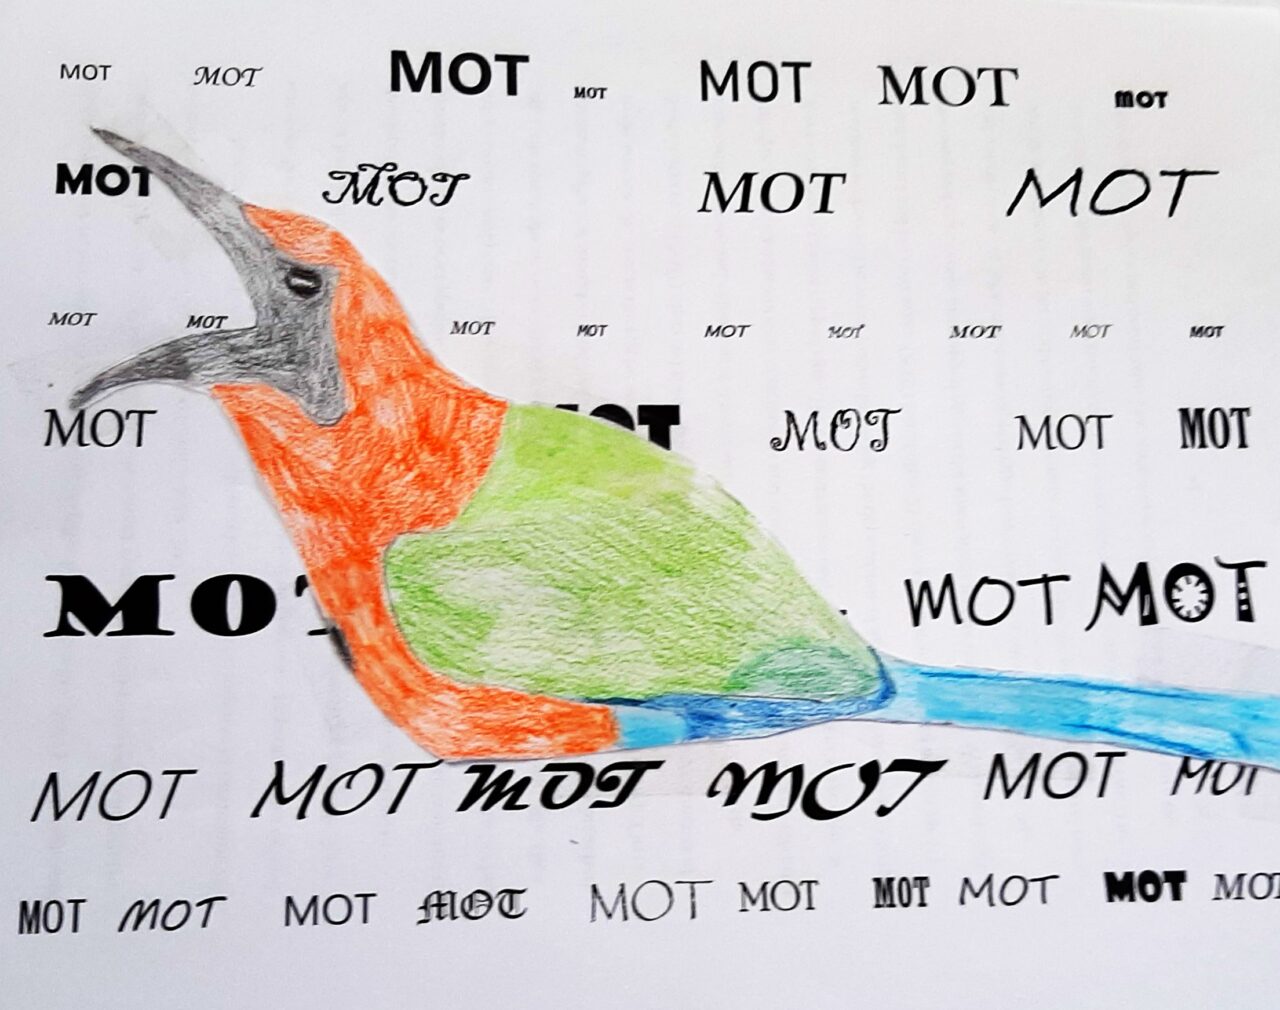 "Motmot Monotony" by Bill Tonn